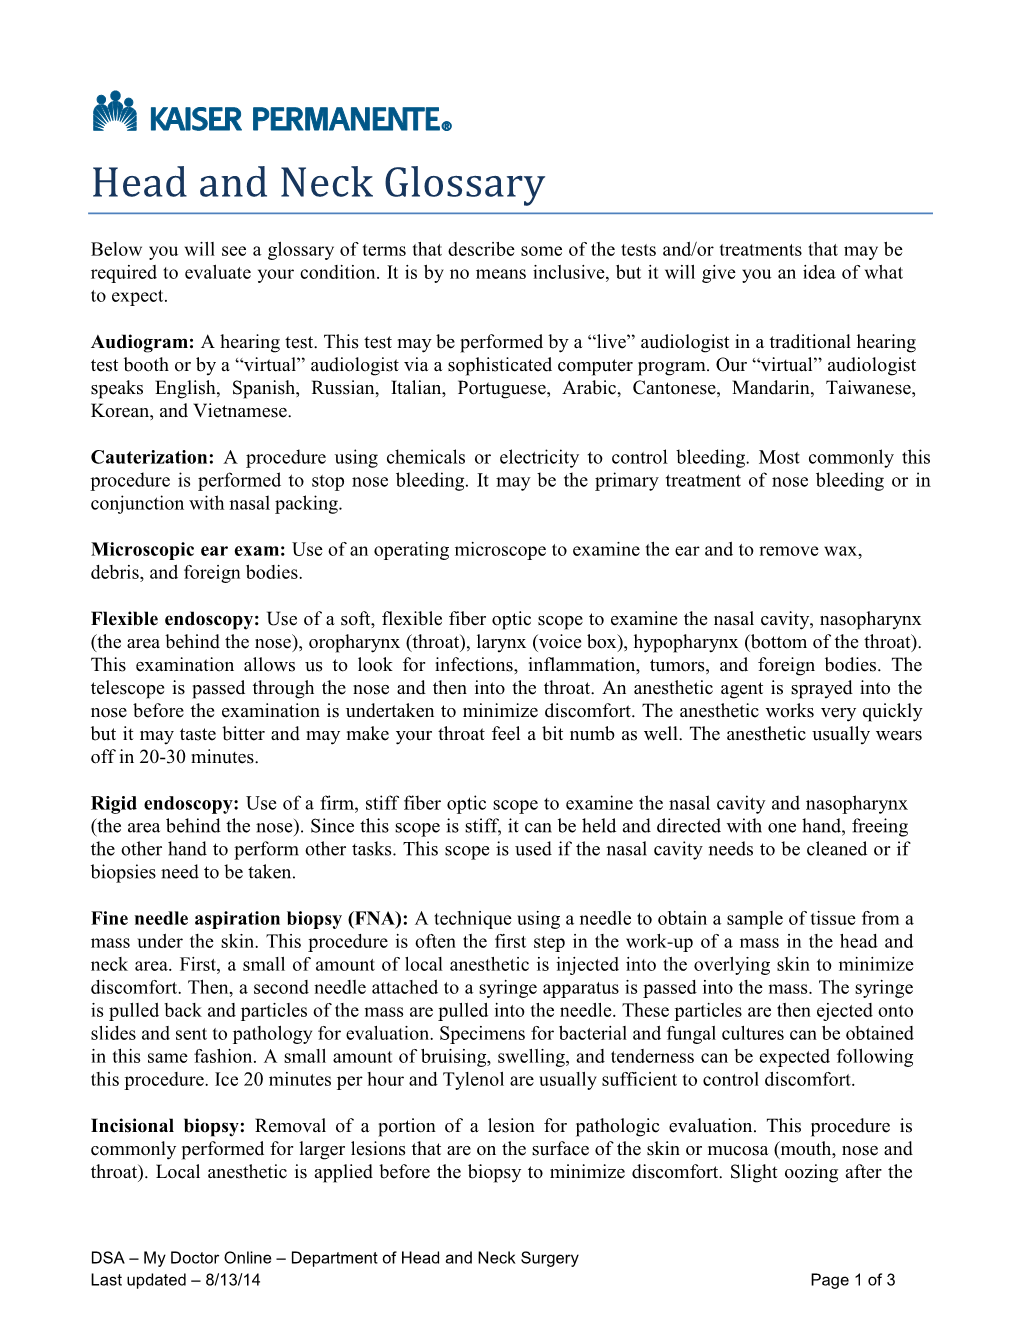 Head and Neck Surgery Glossary